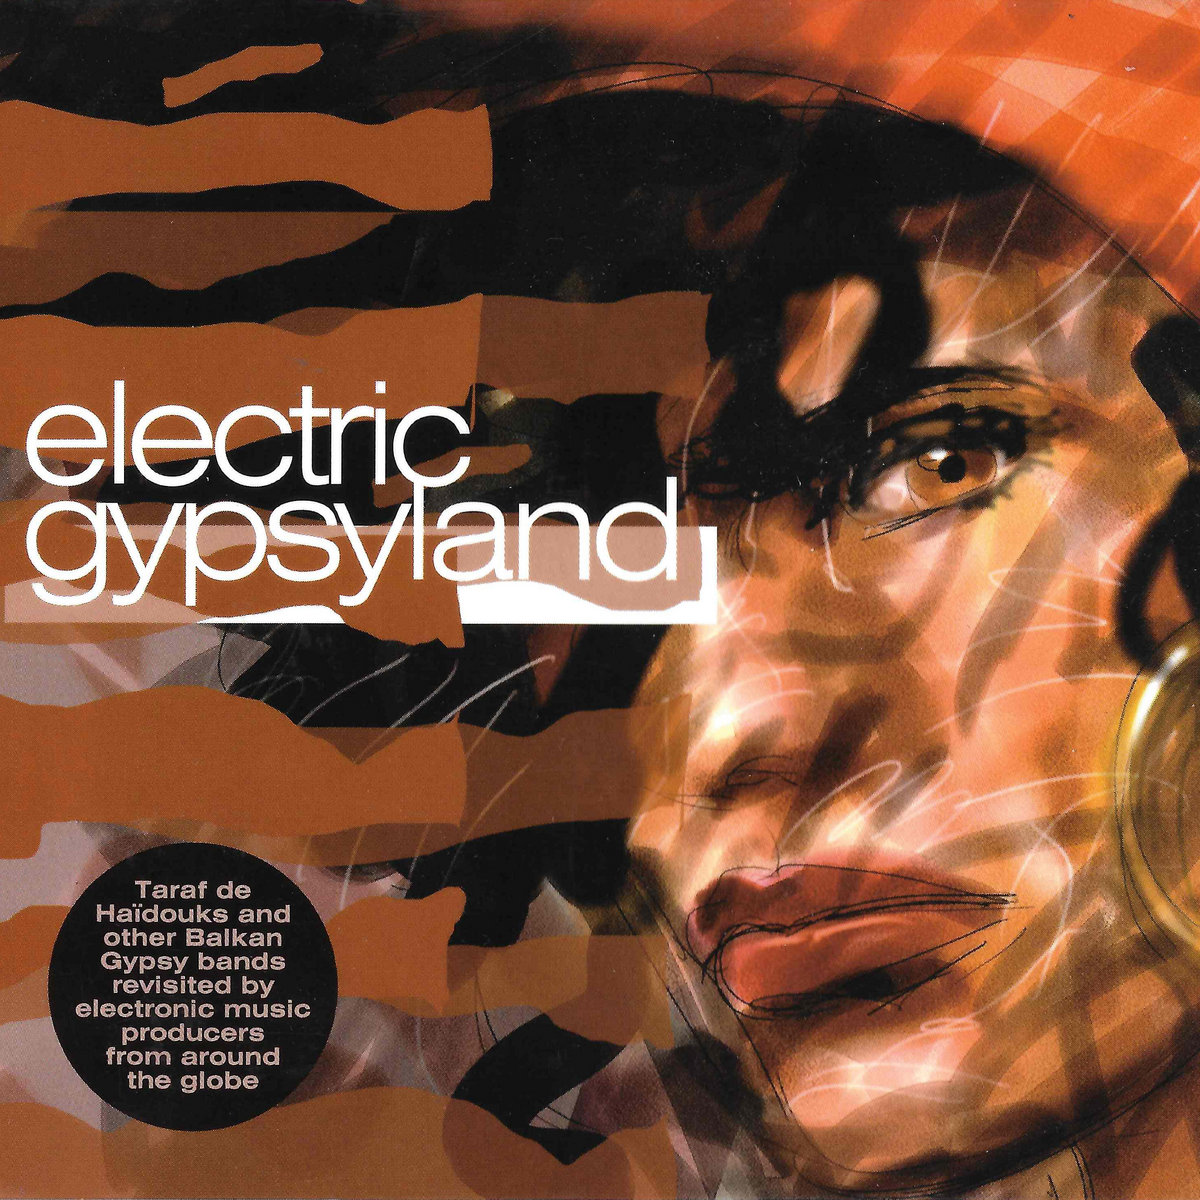 Electric Gypsyland Iest Sexy